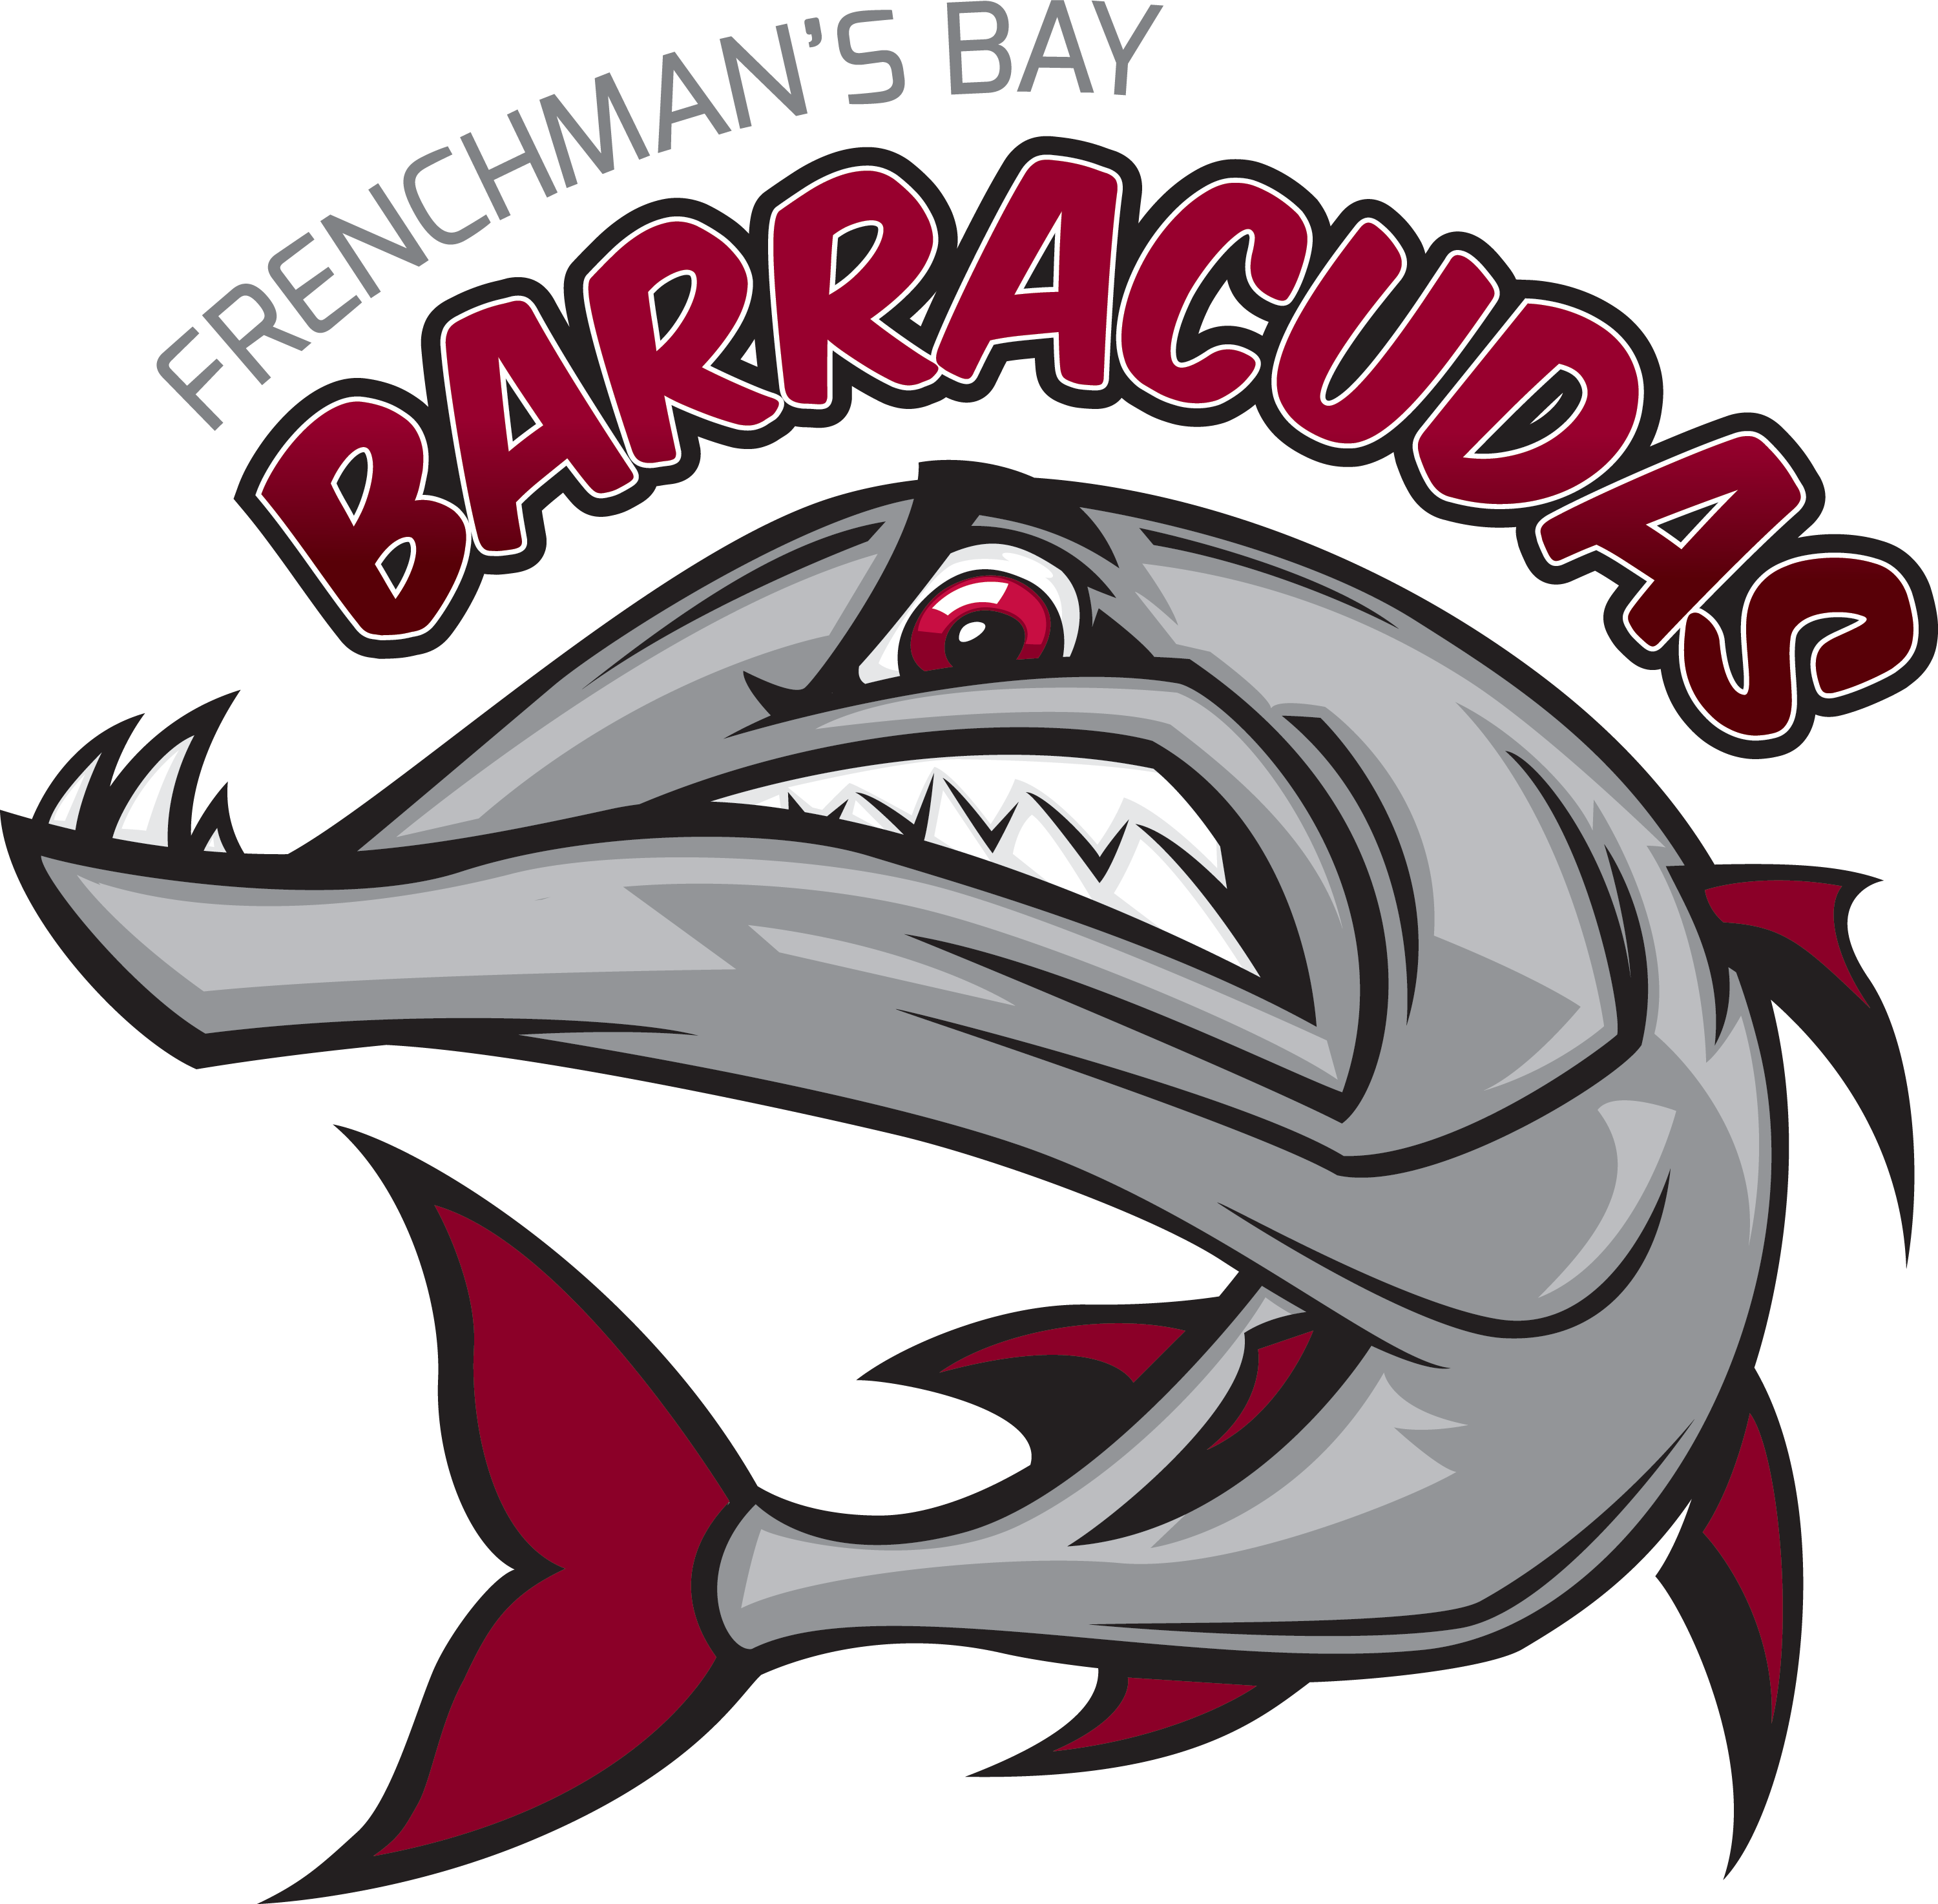 Frenchman's Bay Public School logo